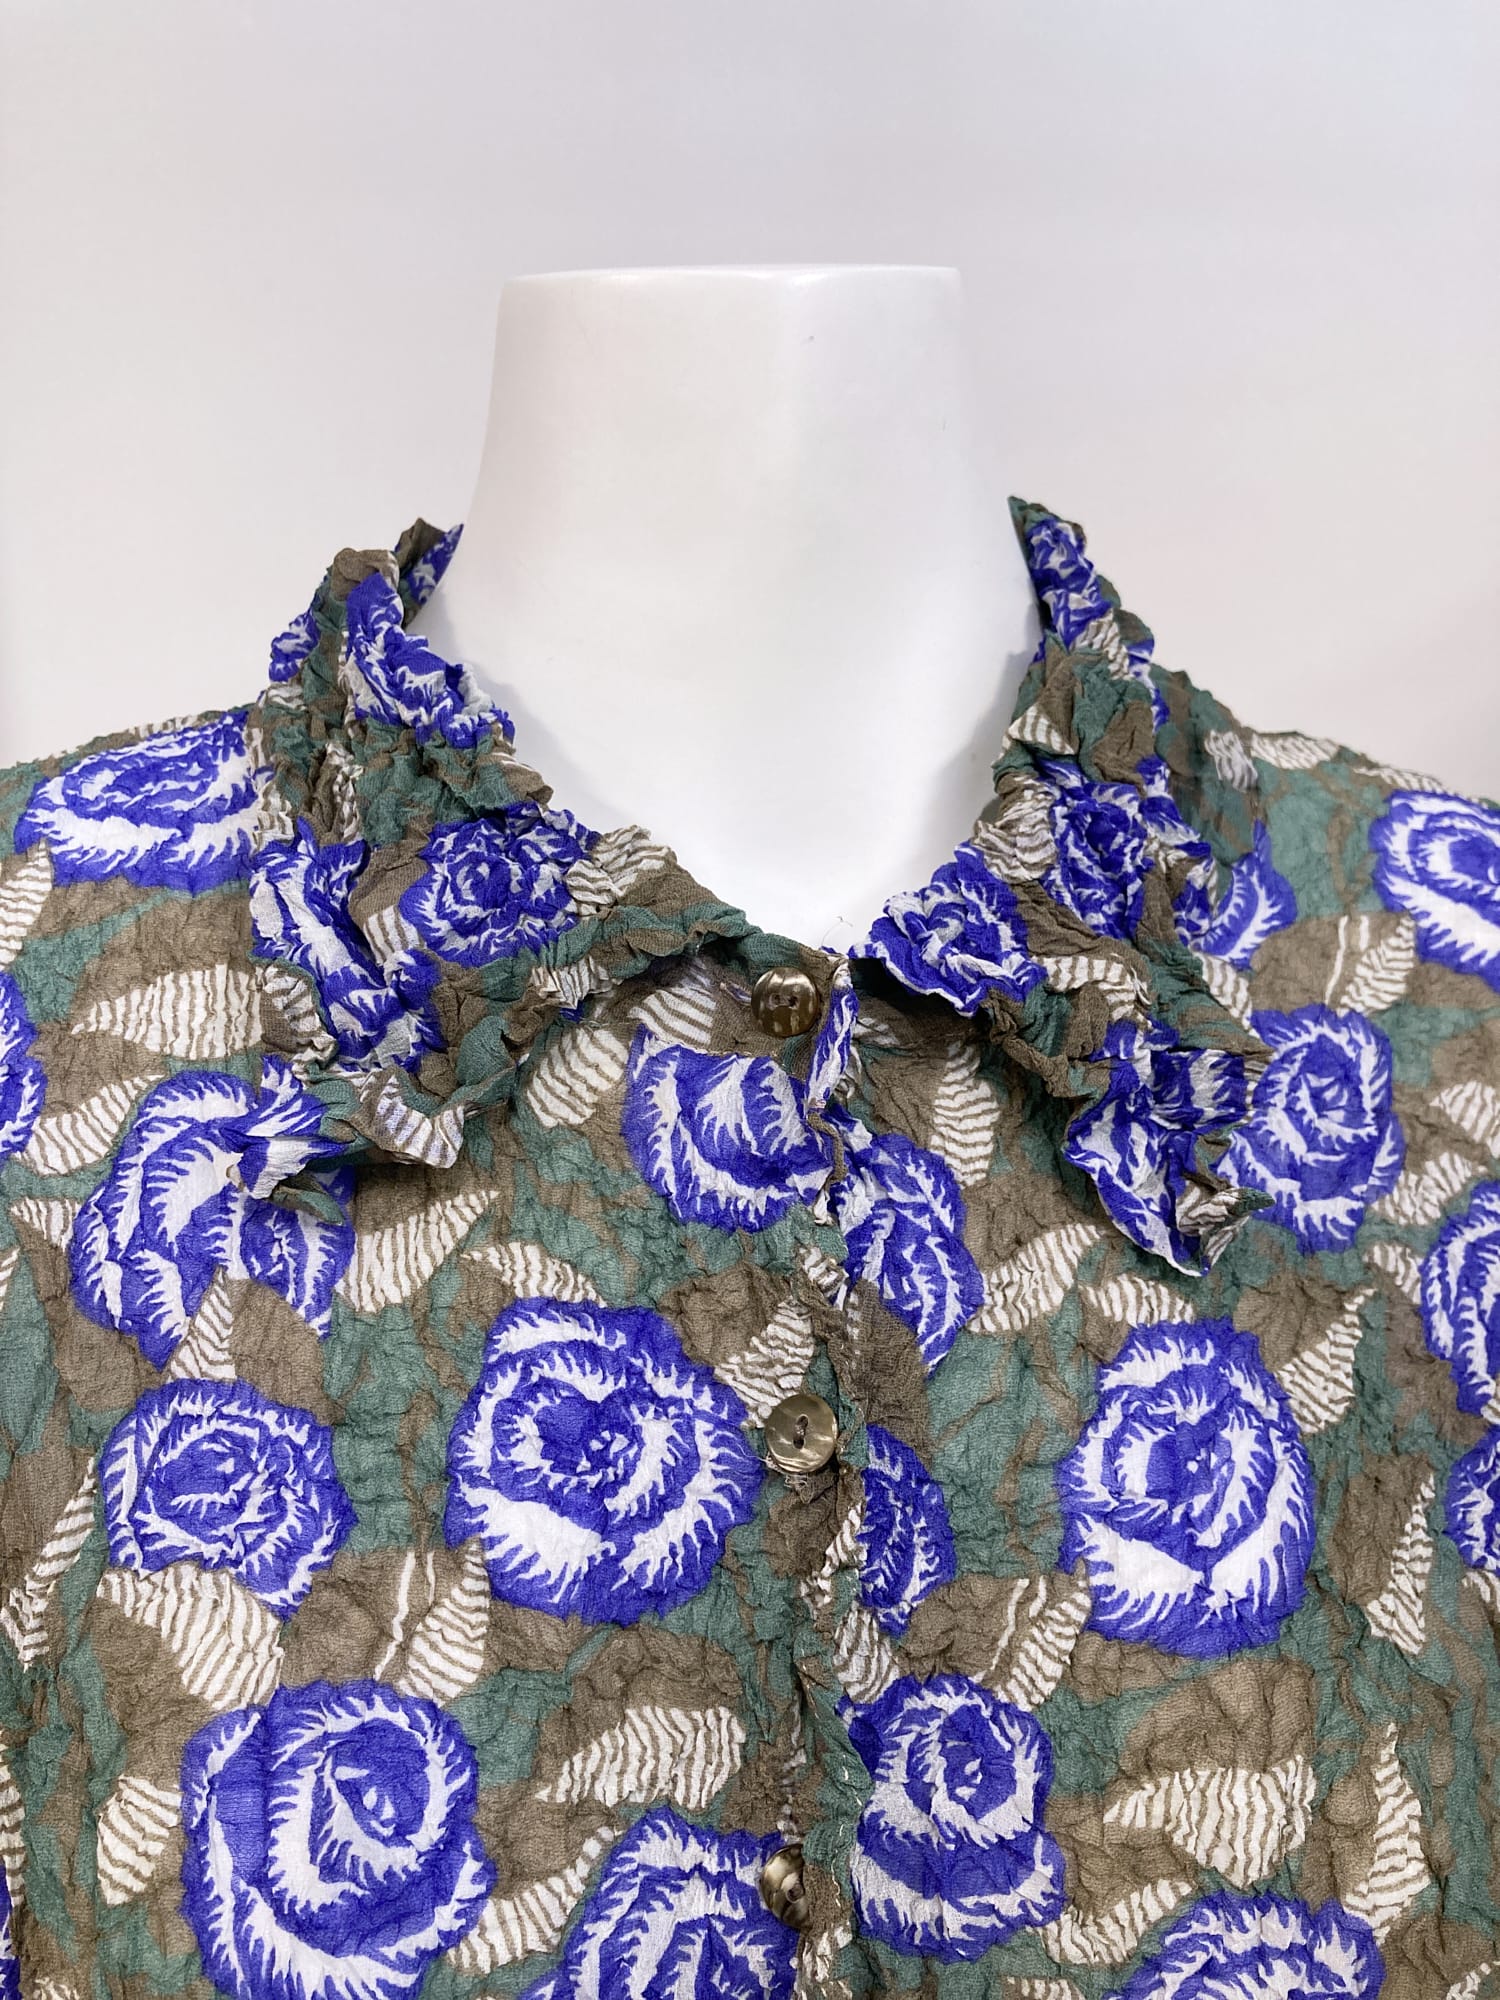 Wrinqle Inoue Pleats purple green brown wrinkled polyester rose pattern shirt